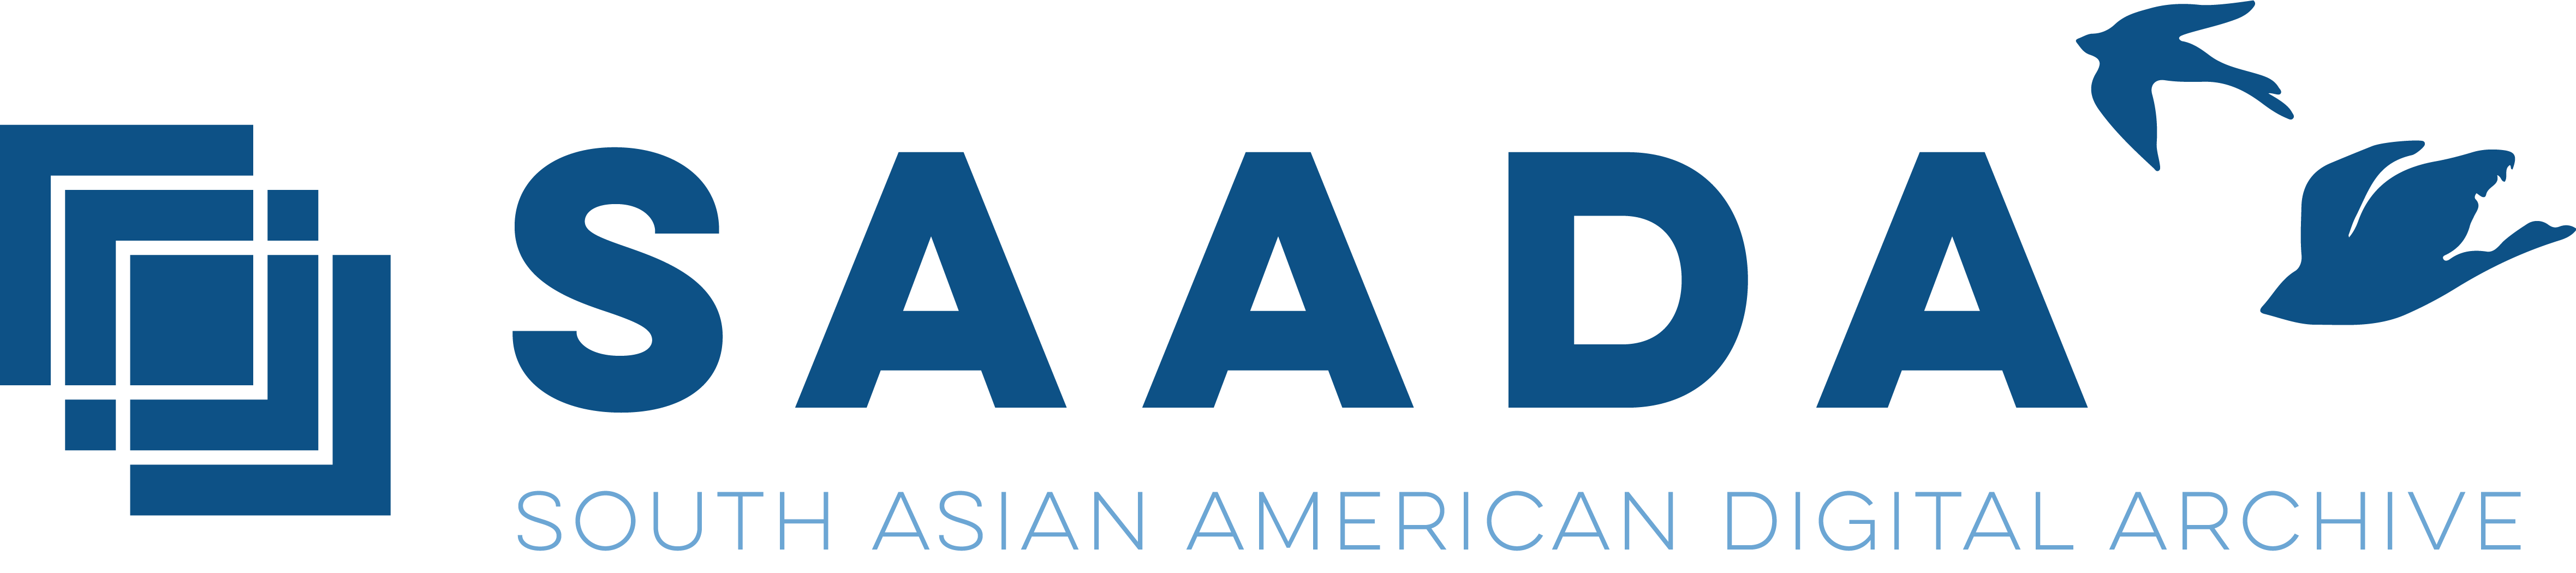 South Asian American Digital Archive (SAADA) Logo